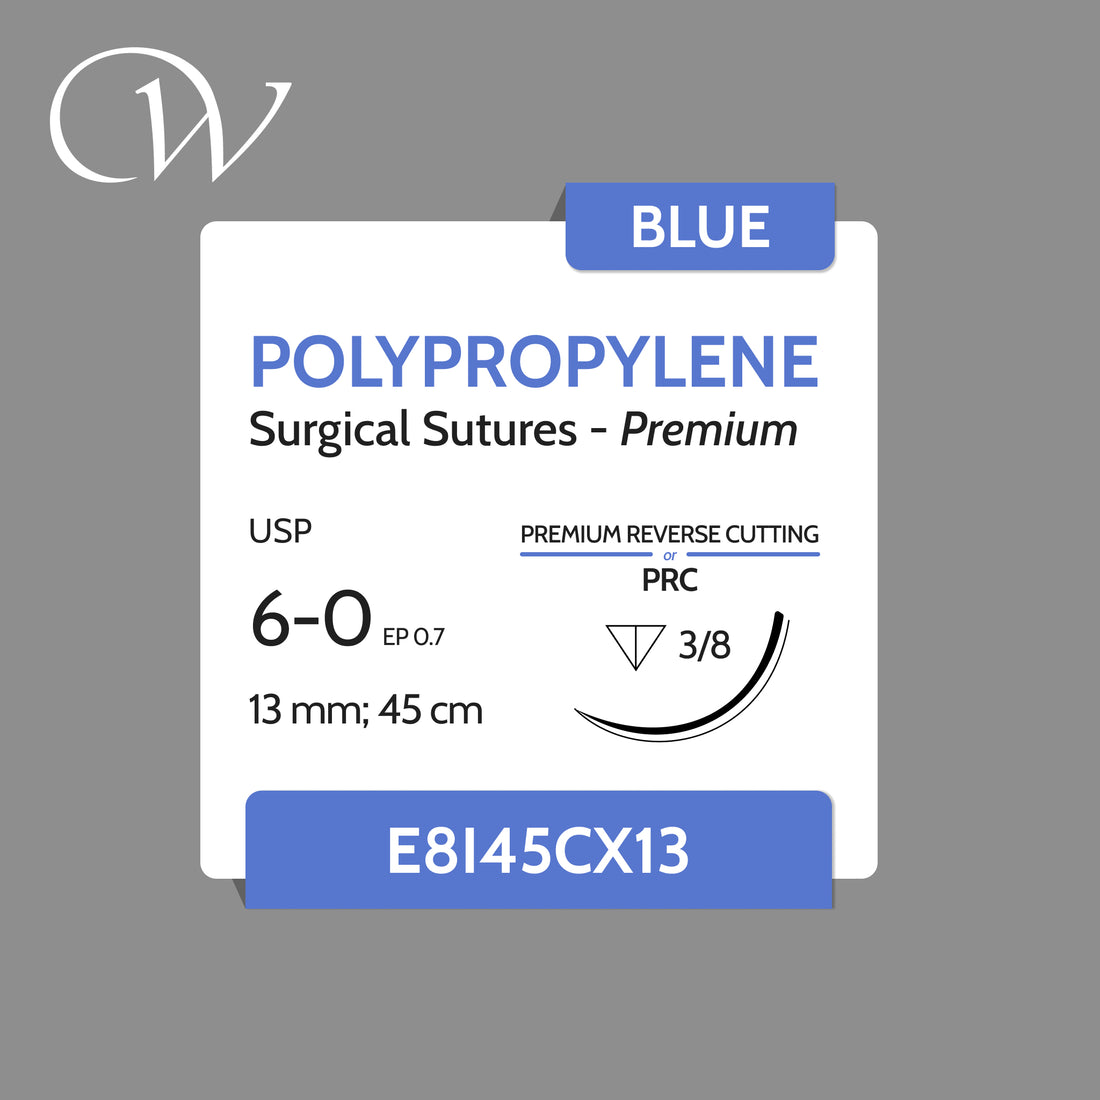 Premium POLYPROPYLENE Sutures 6-0, 3/8 PRC | Blue | 13mm; 45cm